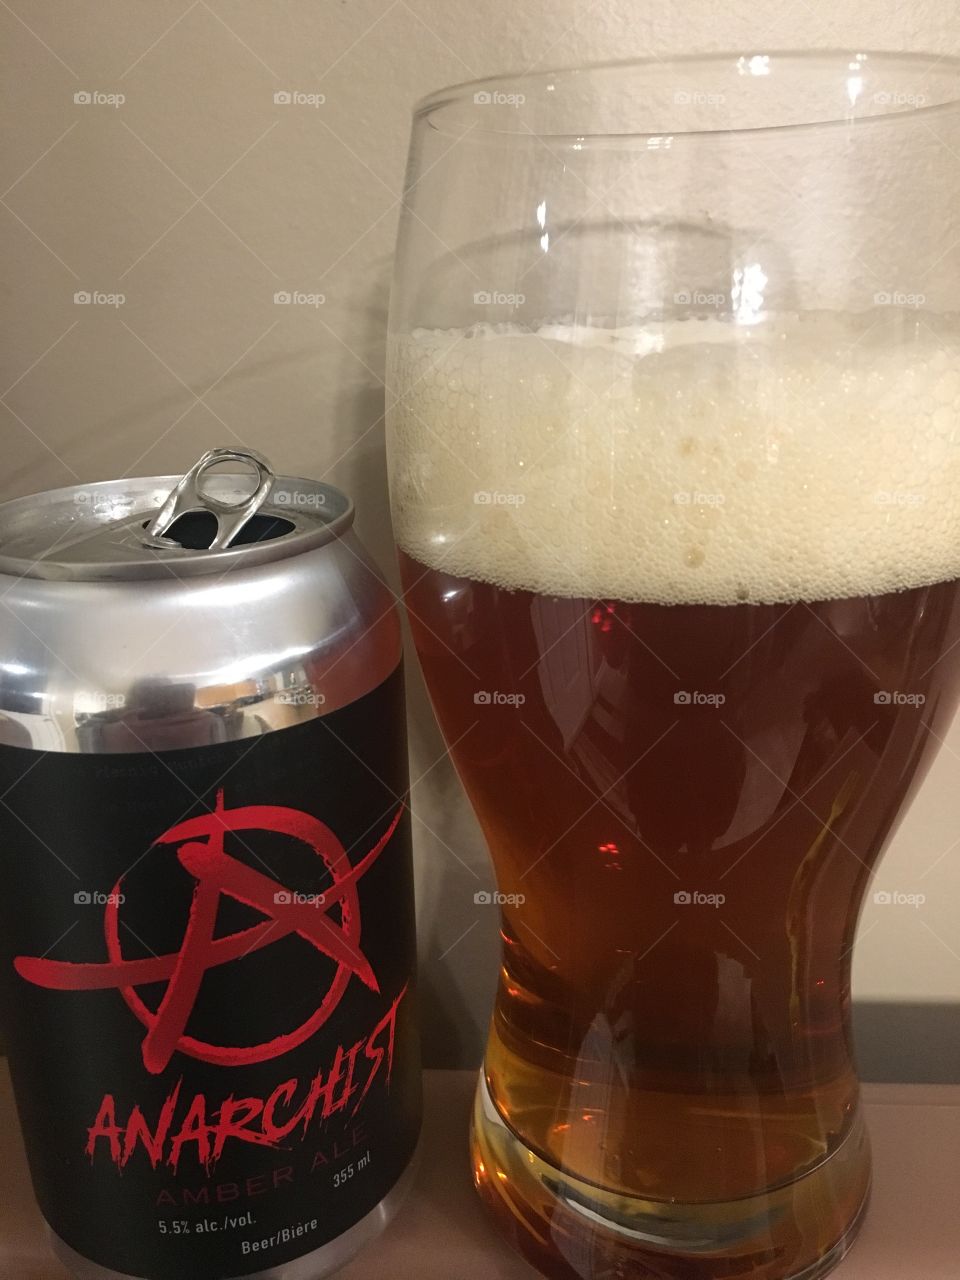 Anarchist craft beer